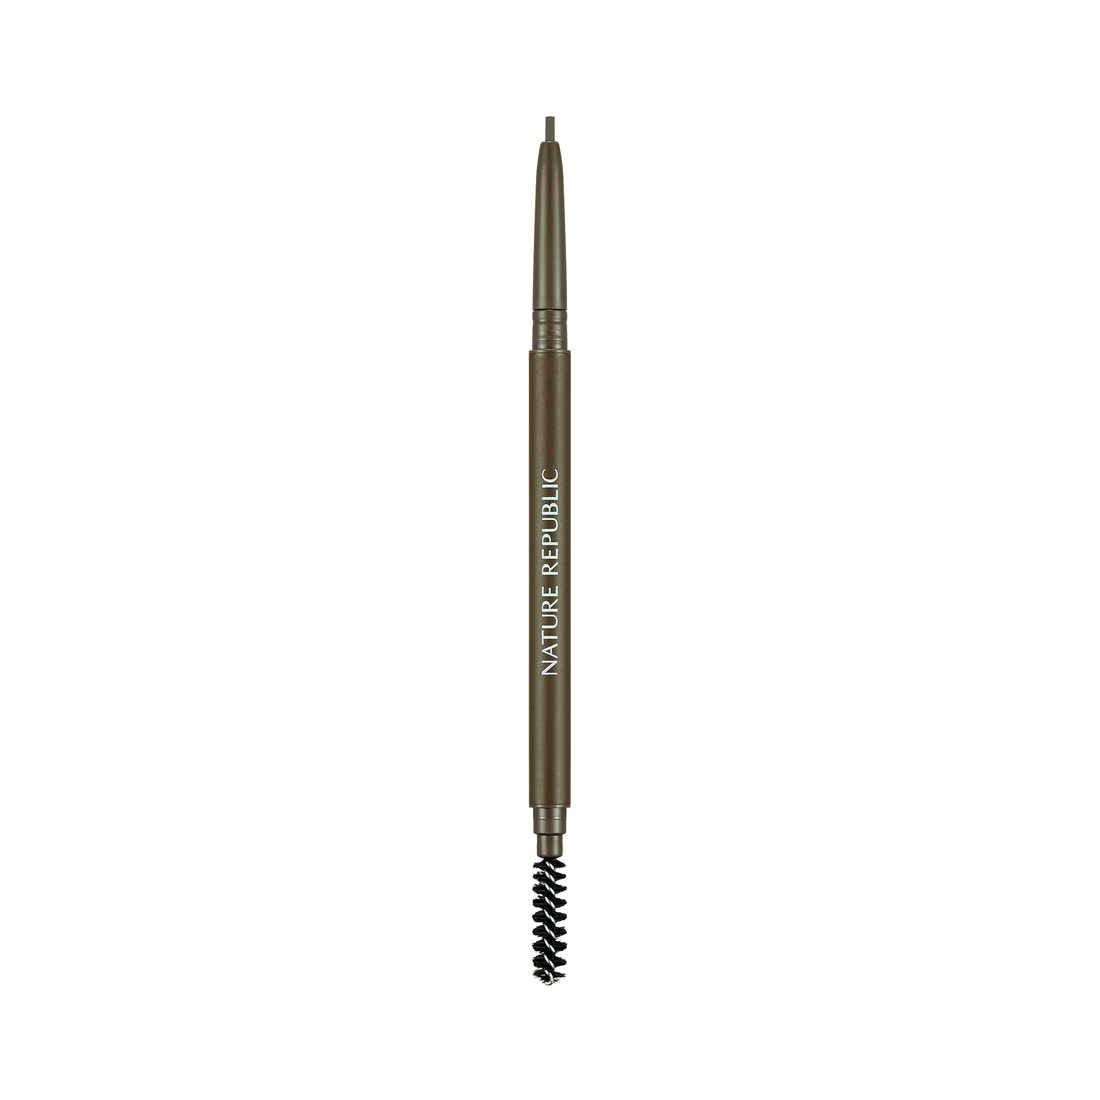 [BOGO][2x] Botanical Micro Slim Brow Pencil (2 Option)